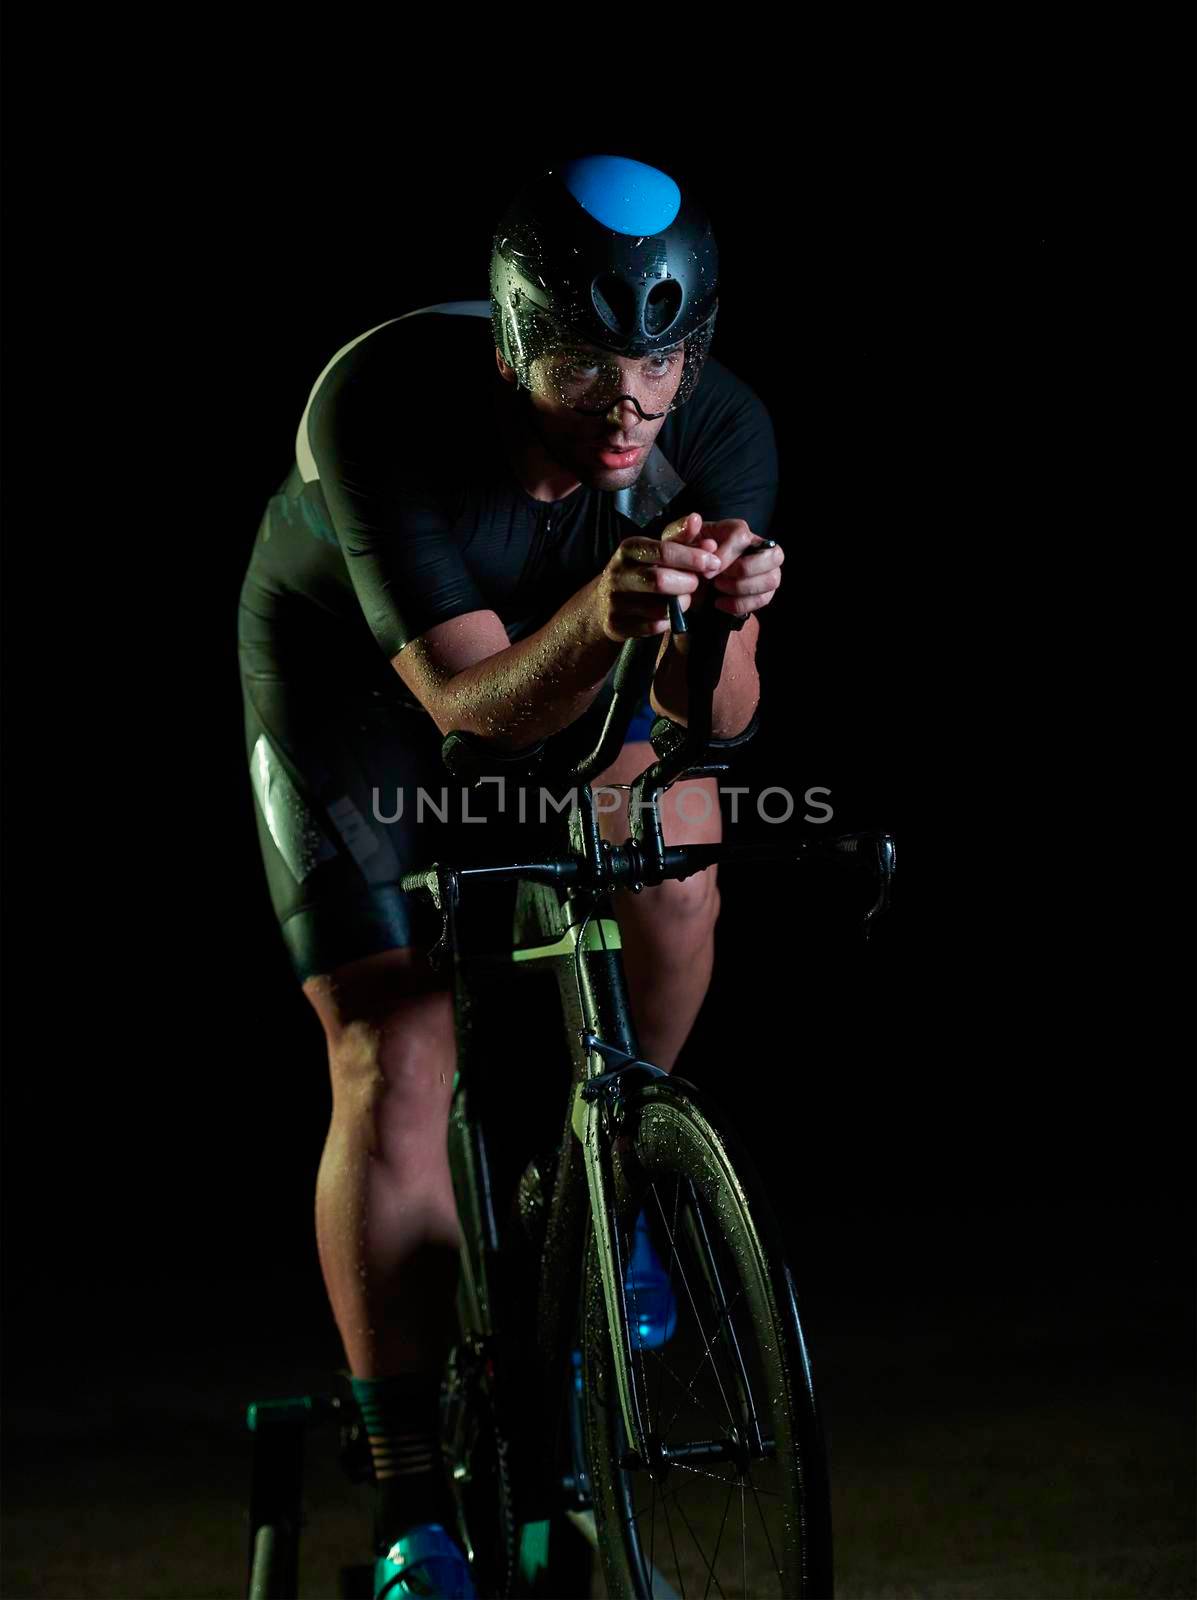 triathlon athlete riding bike fast at night by dotshock